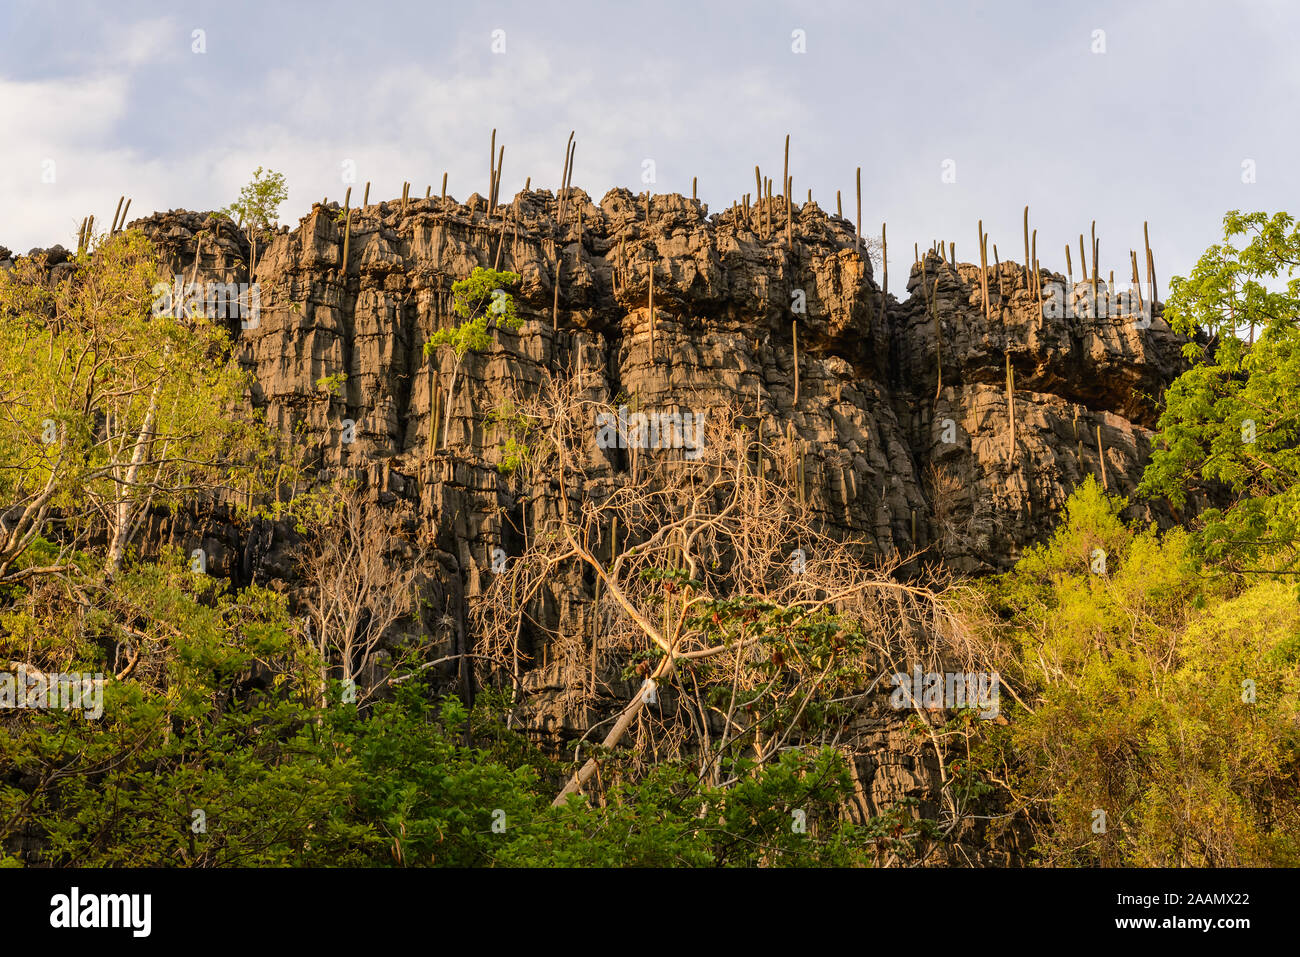 Kalkstein Klippe mit großen Kakteen in ariden Cerrado. Bahia, Brasilien, Südamerika. Stockfoto